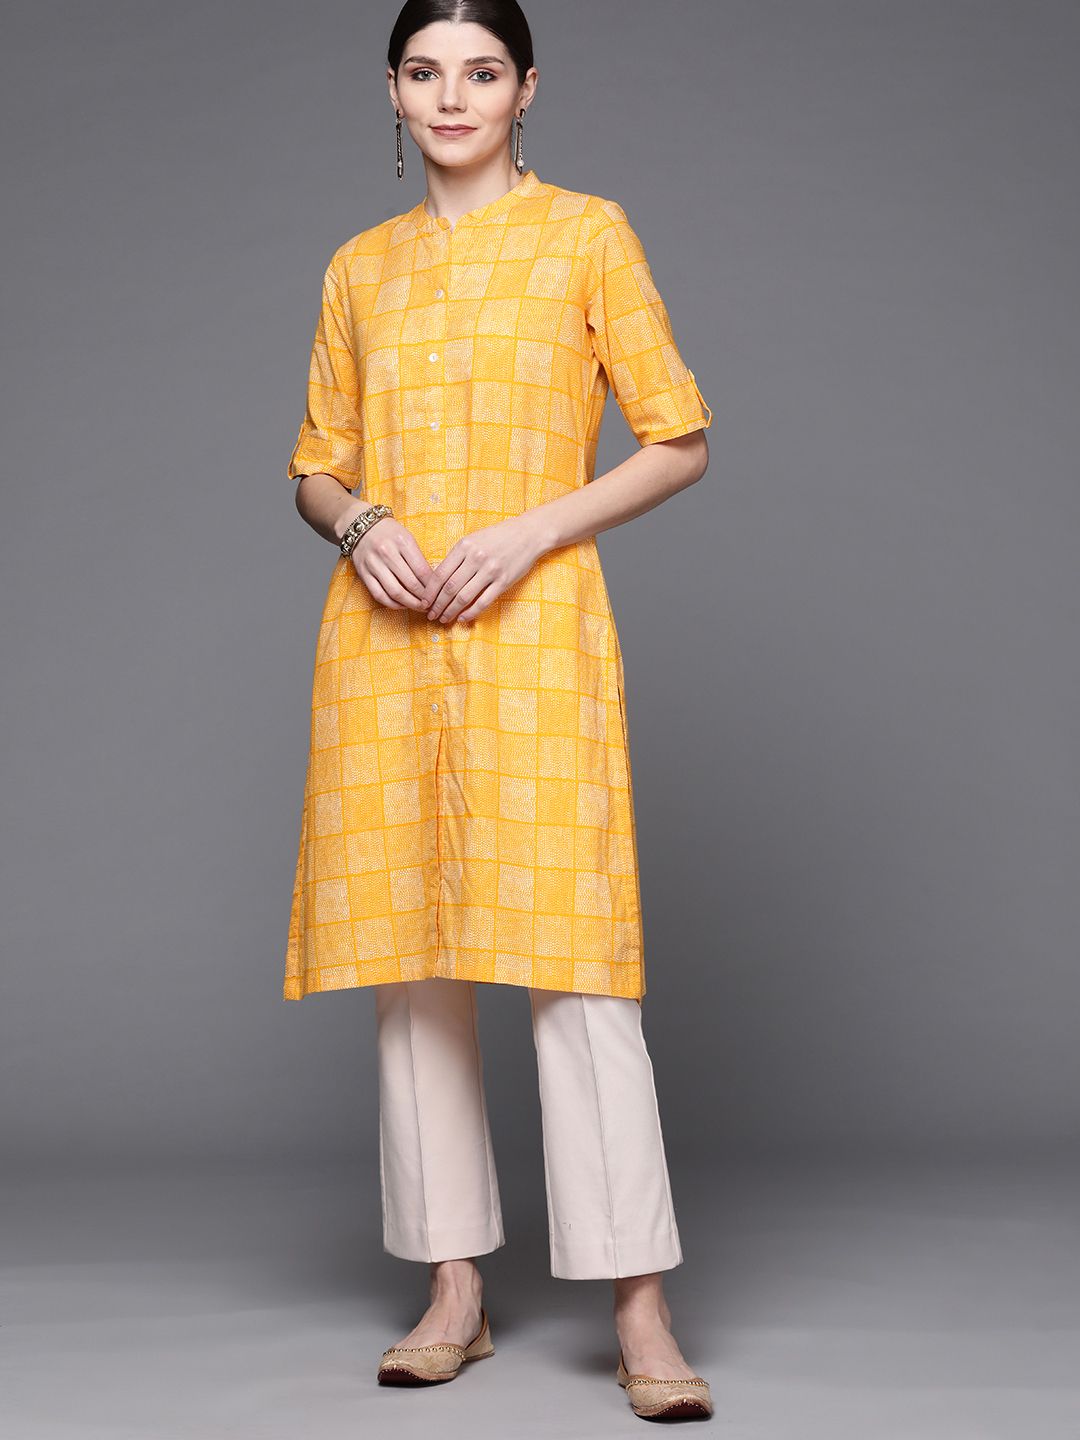 Biba Women Yellow & Off-White Pure Cotton Geometric Printed Roll-Up Sleeves Kurta Price in India